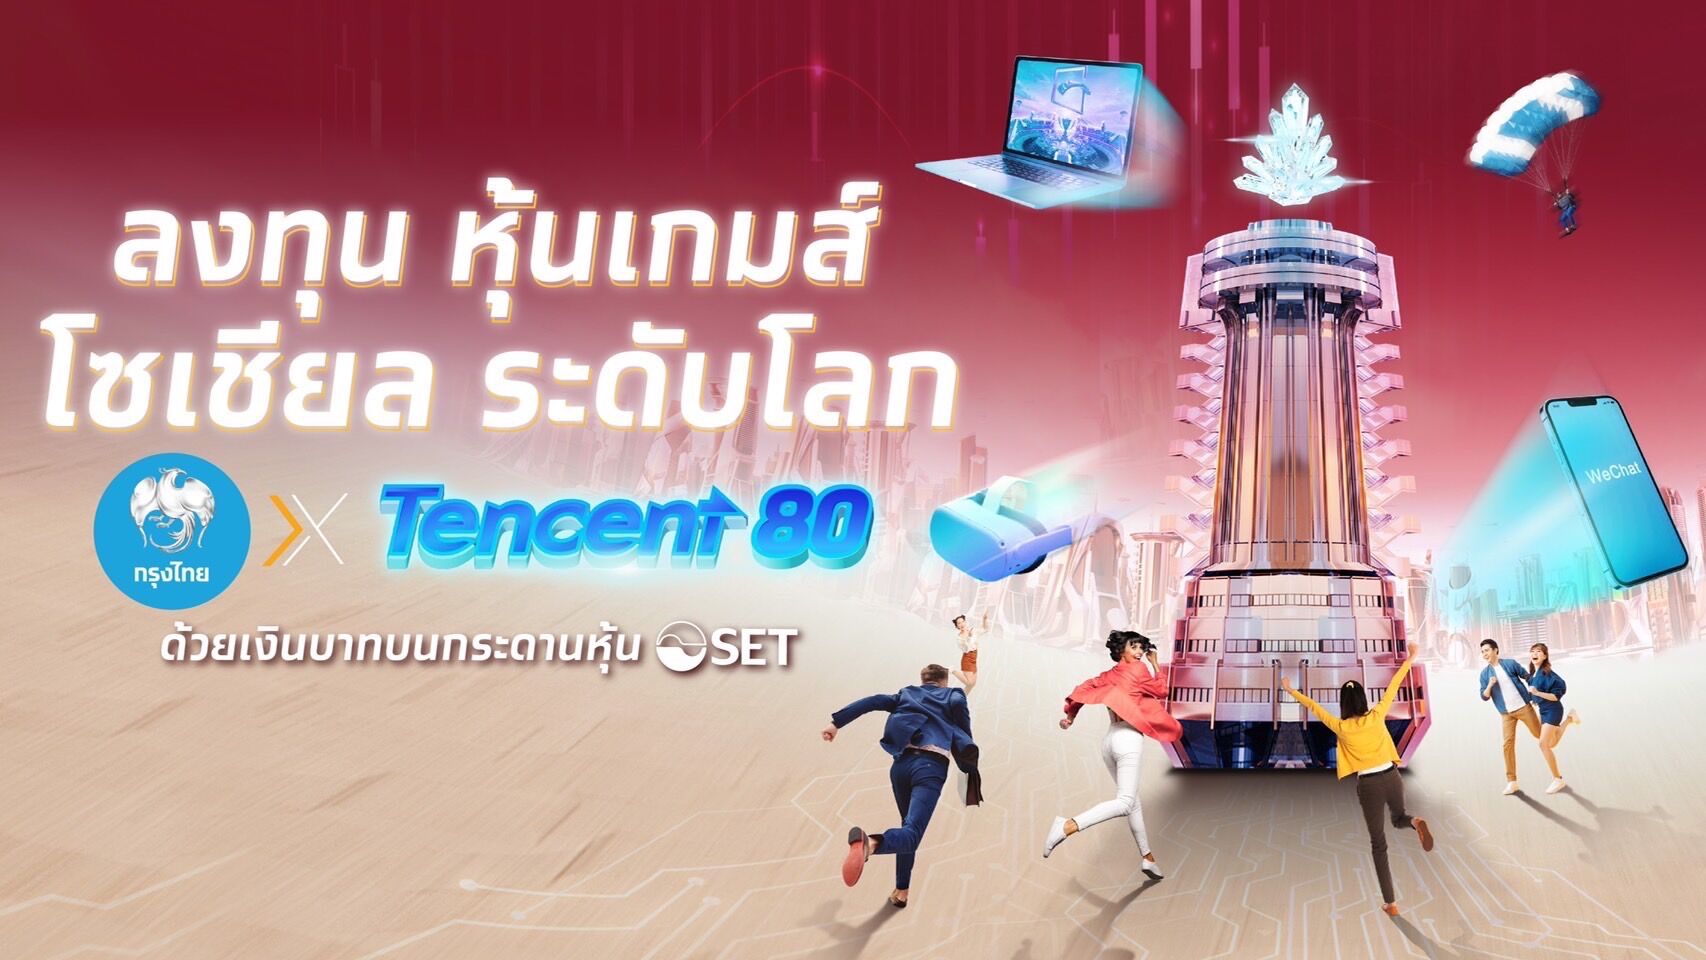 TENCENT80